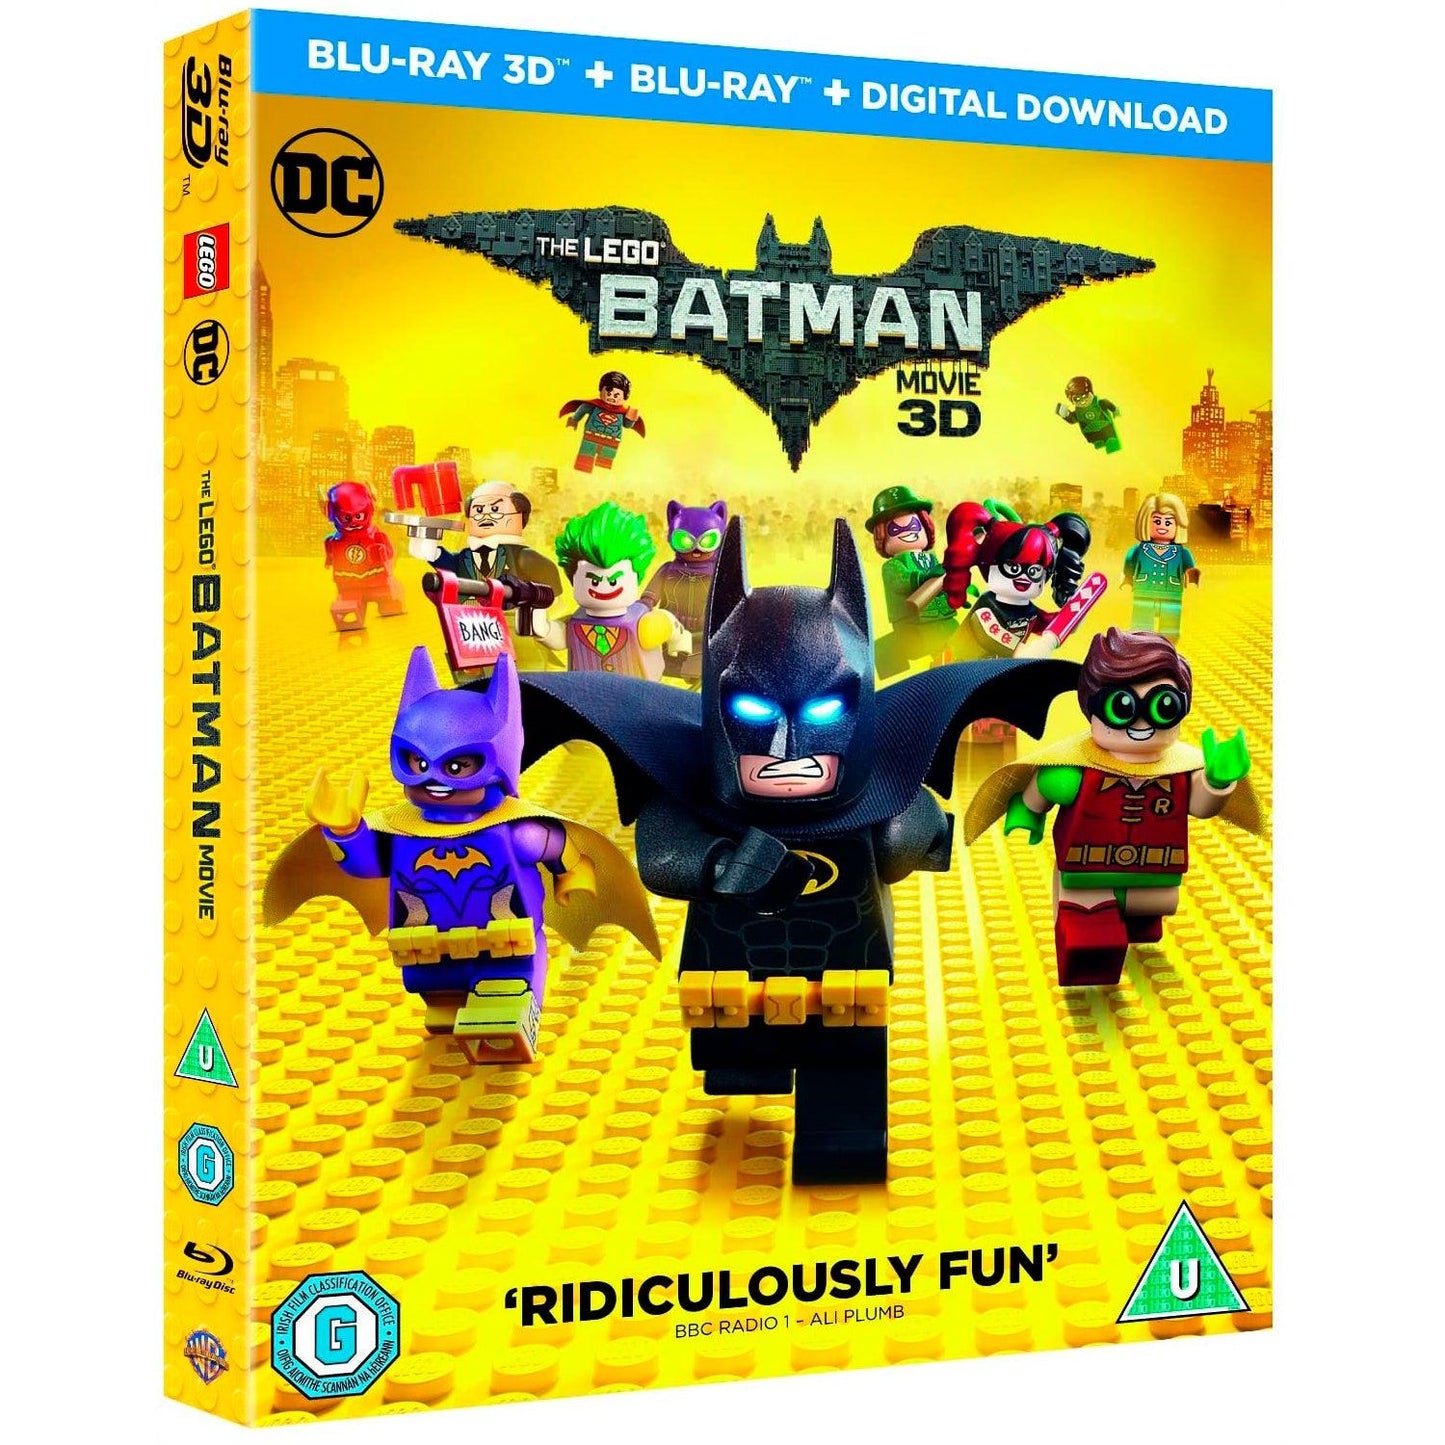 Лего Фильм: Бэтмен 3D (Blu-ray)